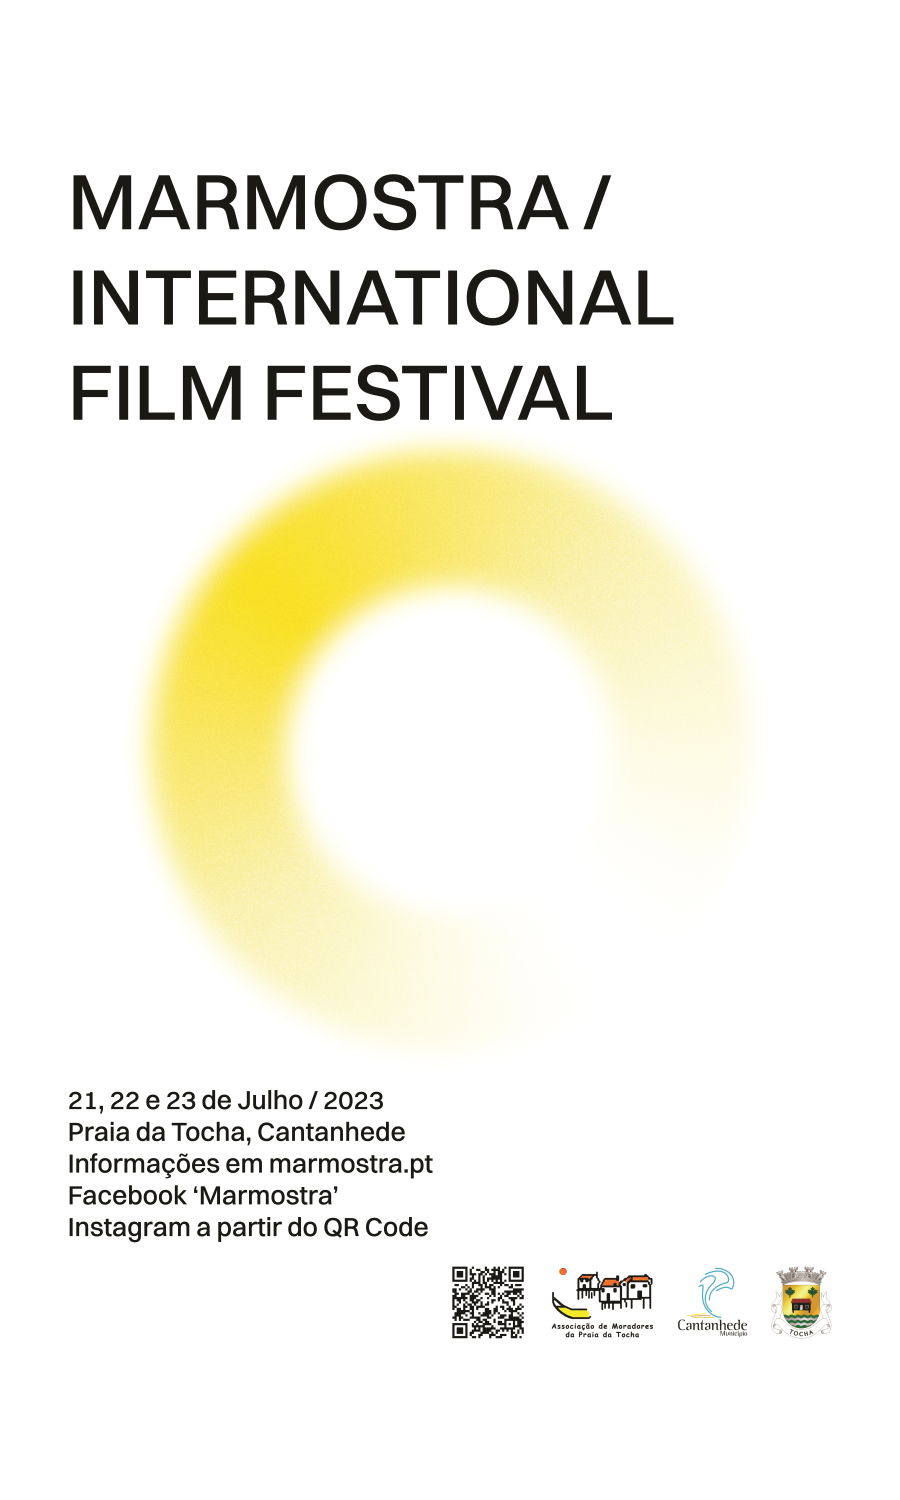 Marmostra - International Film Festival